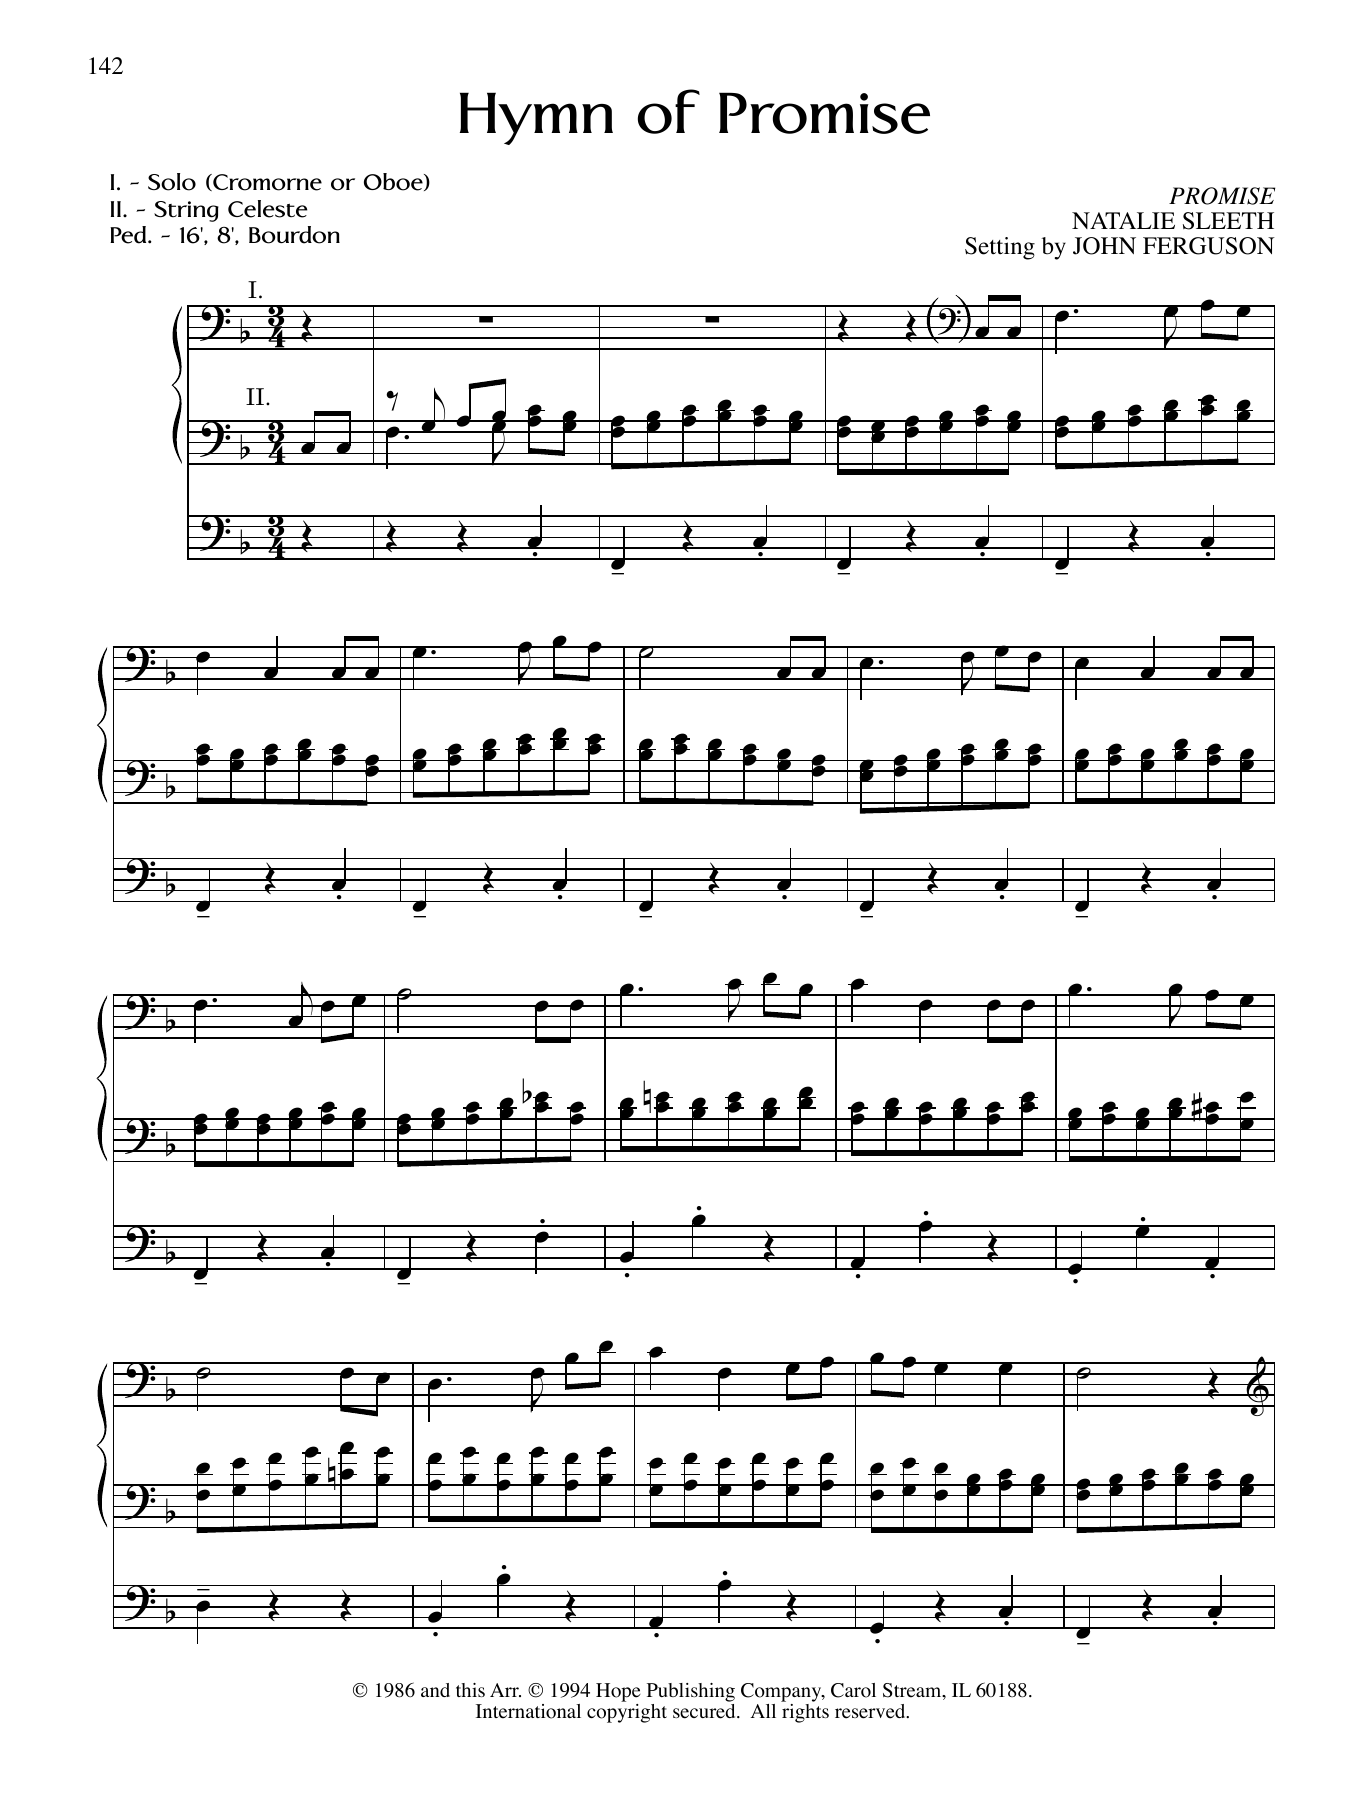 JOHN FERGUSON Hymn of Promise Sheet Music Notes & Chords for Organ - Download or Print PDF